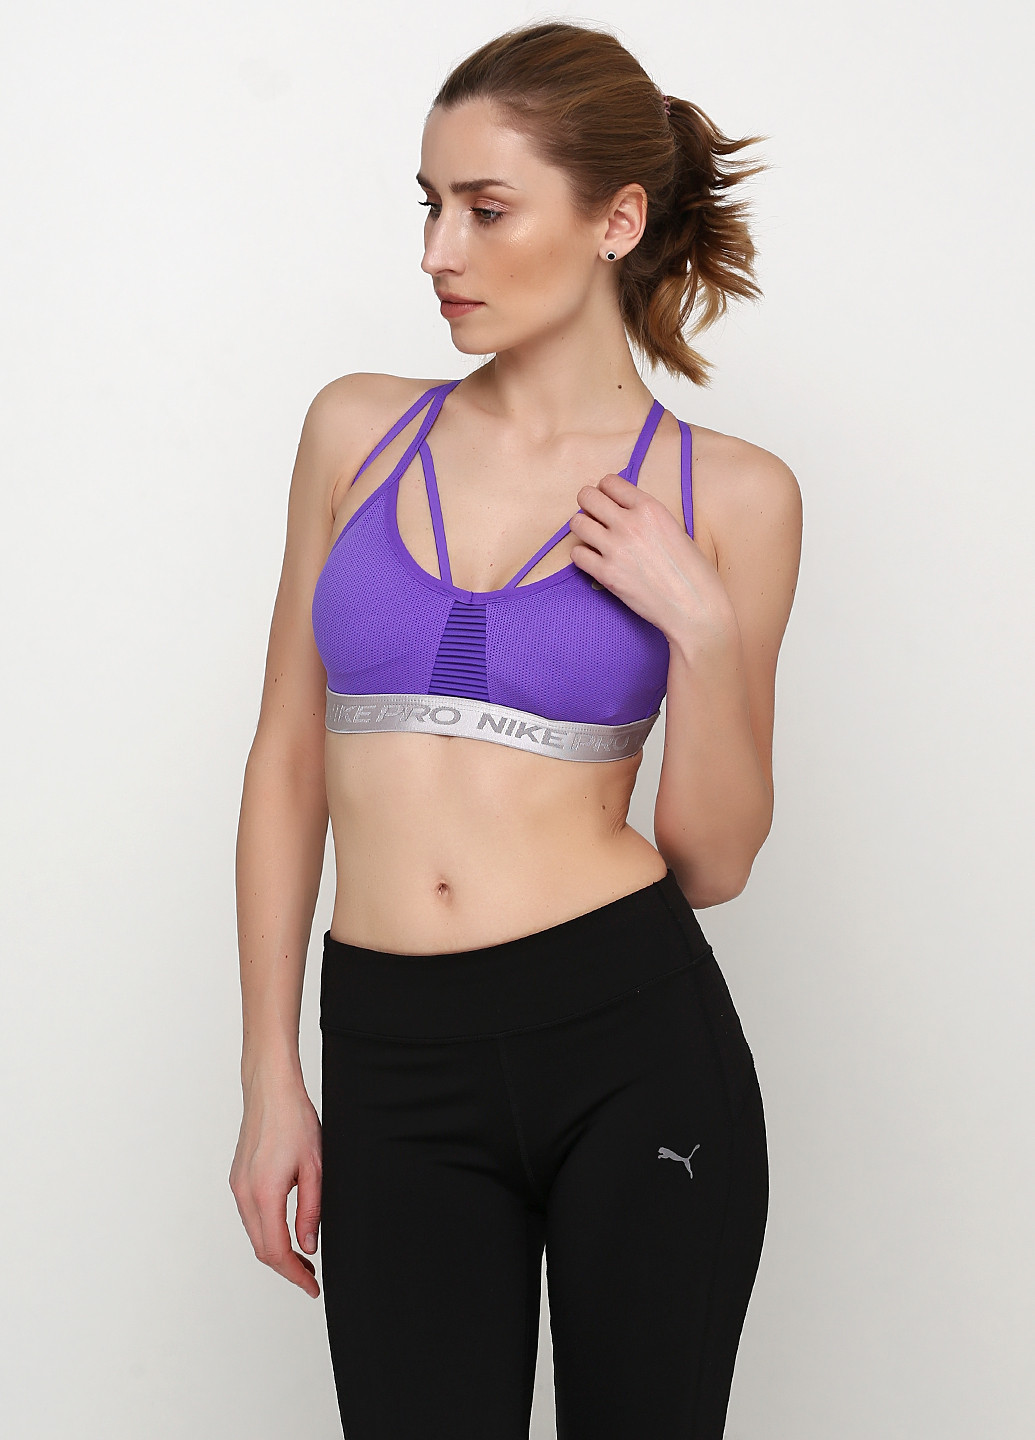 Топ Nike логотип фиолетовый спортивный трикотаж